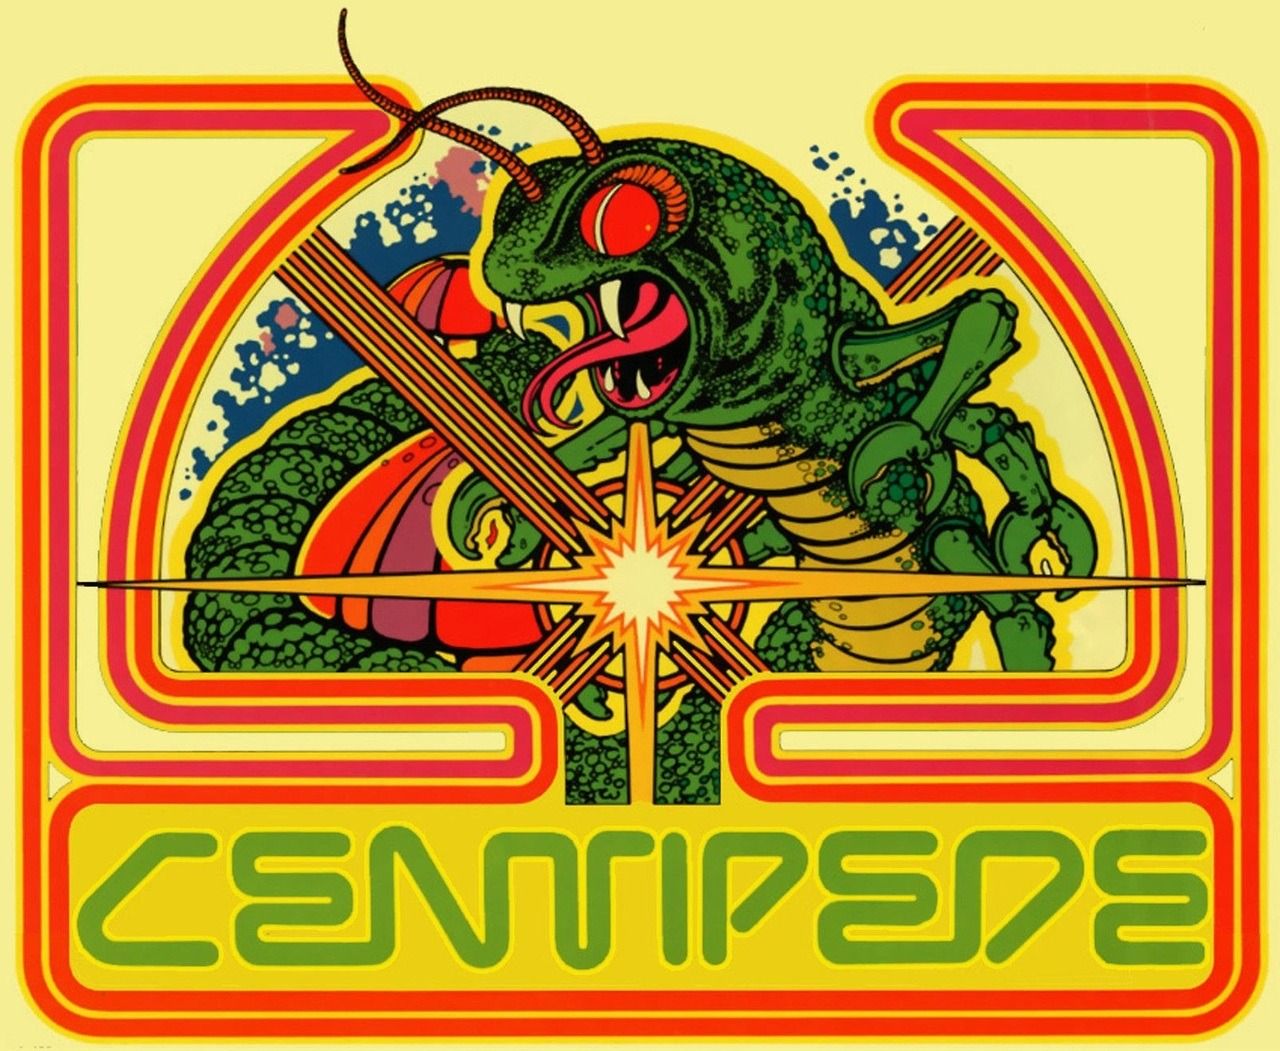 Centipede Arcade Game Art